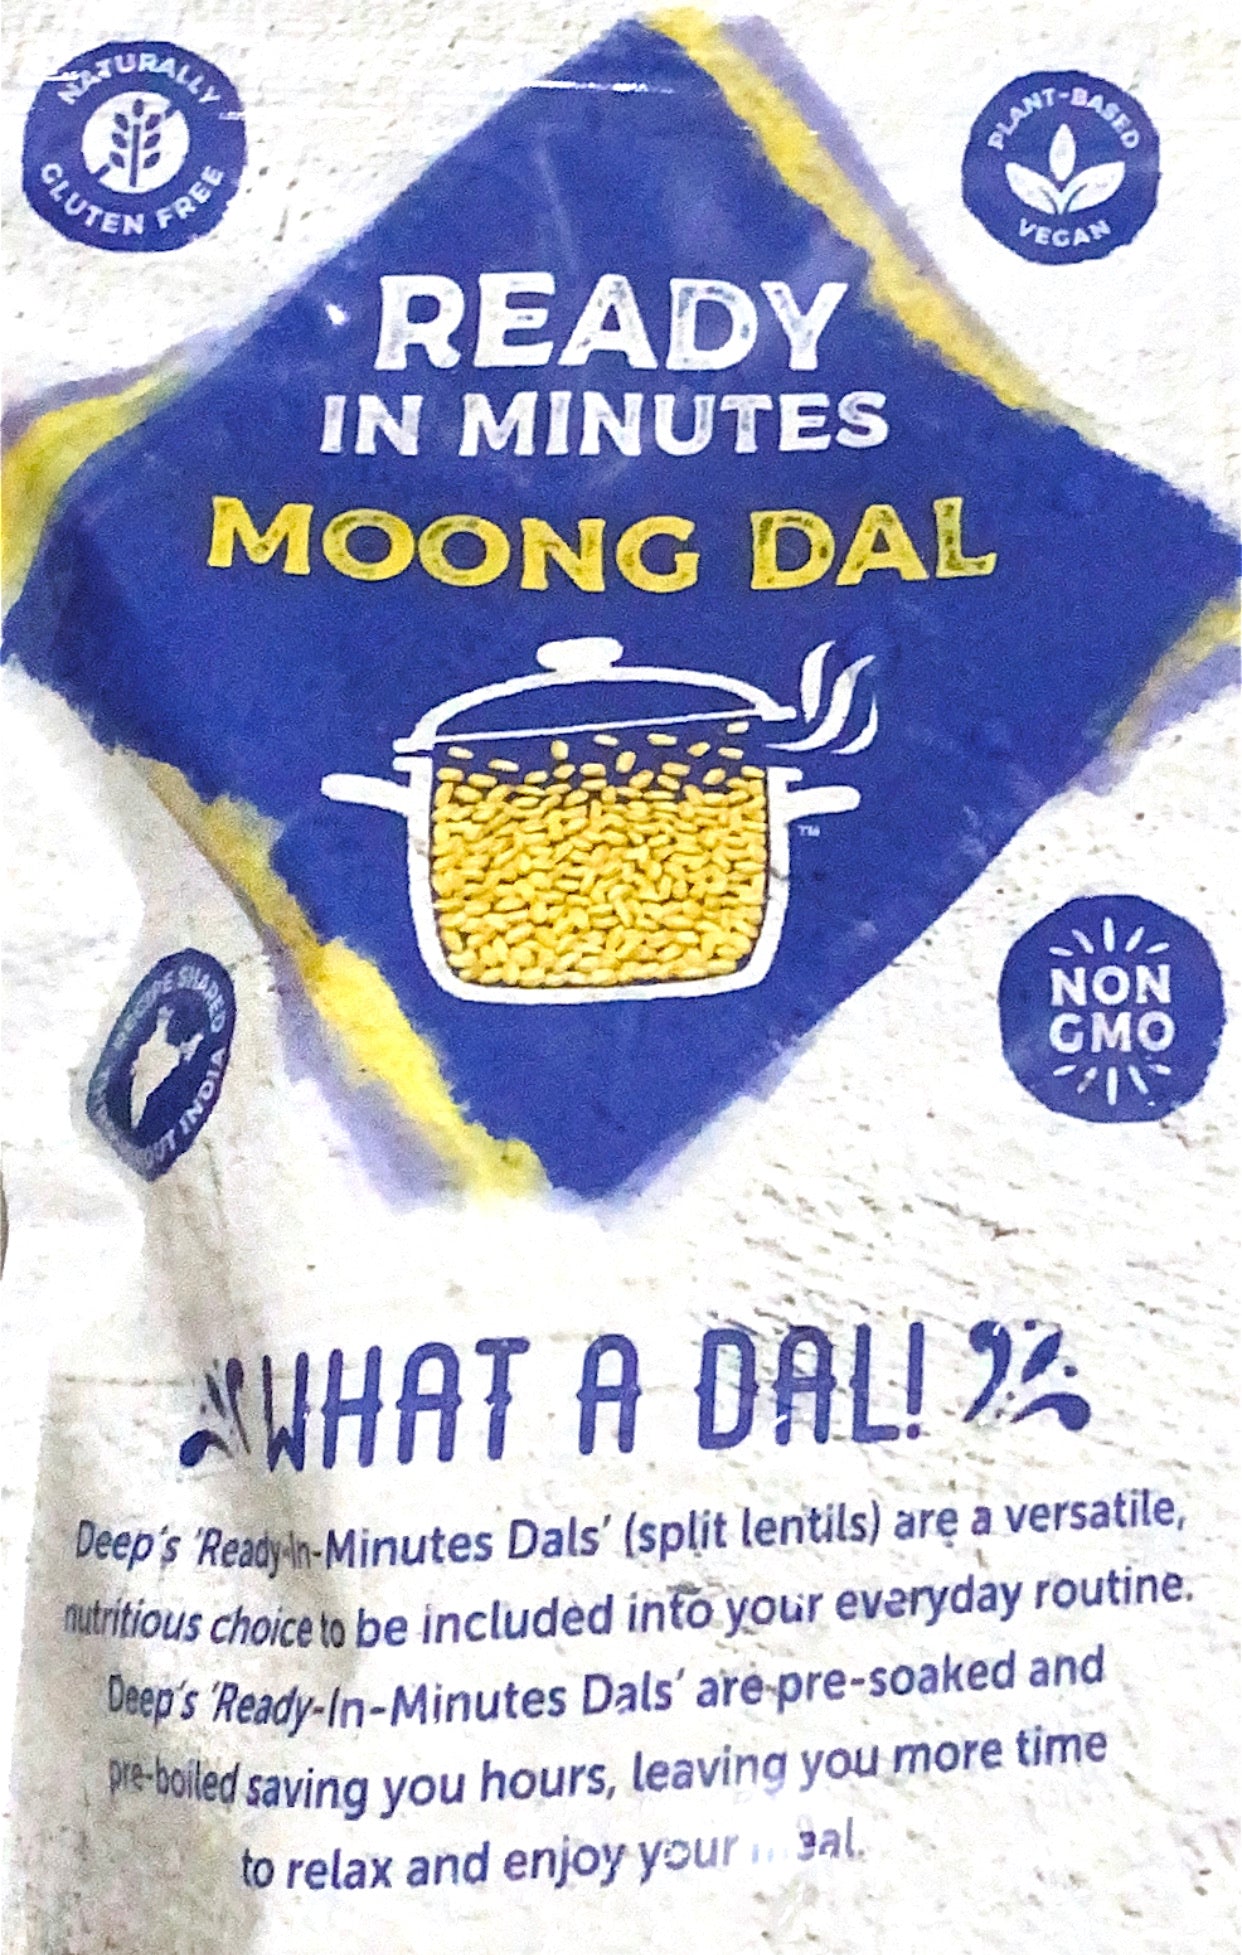 Moong Dal